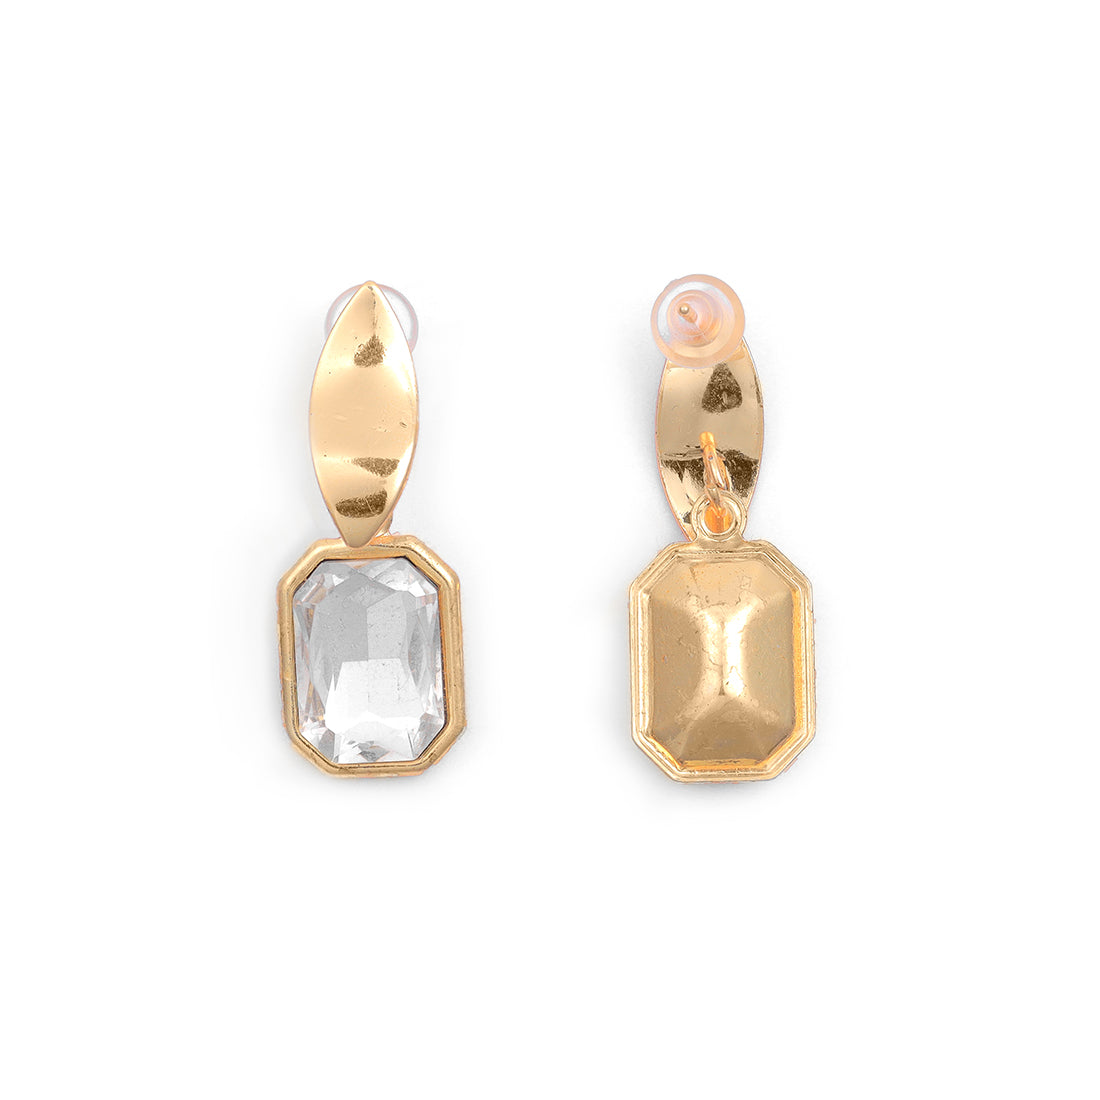 Elegant Gold-Toned Stud Earrings Featuring A Dazzling Square Rhinestone Drop.